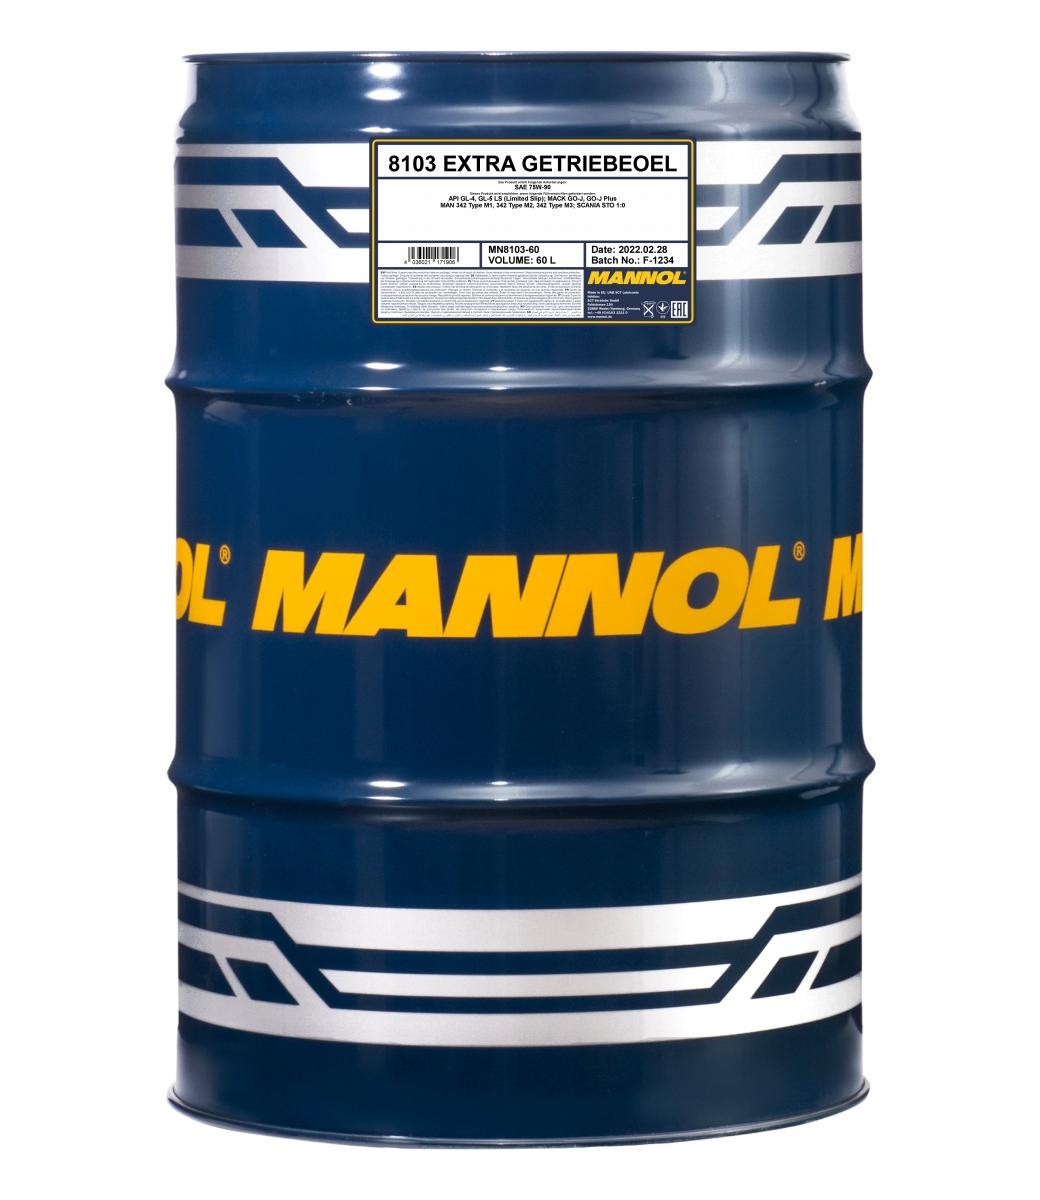 MANNOL Extra GL5, Getriebeoel 75W-90, Synthetic Oil, Capacity: 60l MAN 342 Type M1, MAN 342 Type M2, MAN 342 Type M3, MACK GO-J, MACK GO-J Plus, SCANIA STO 1:0 Transmission oil MN8103-60 buy